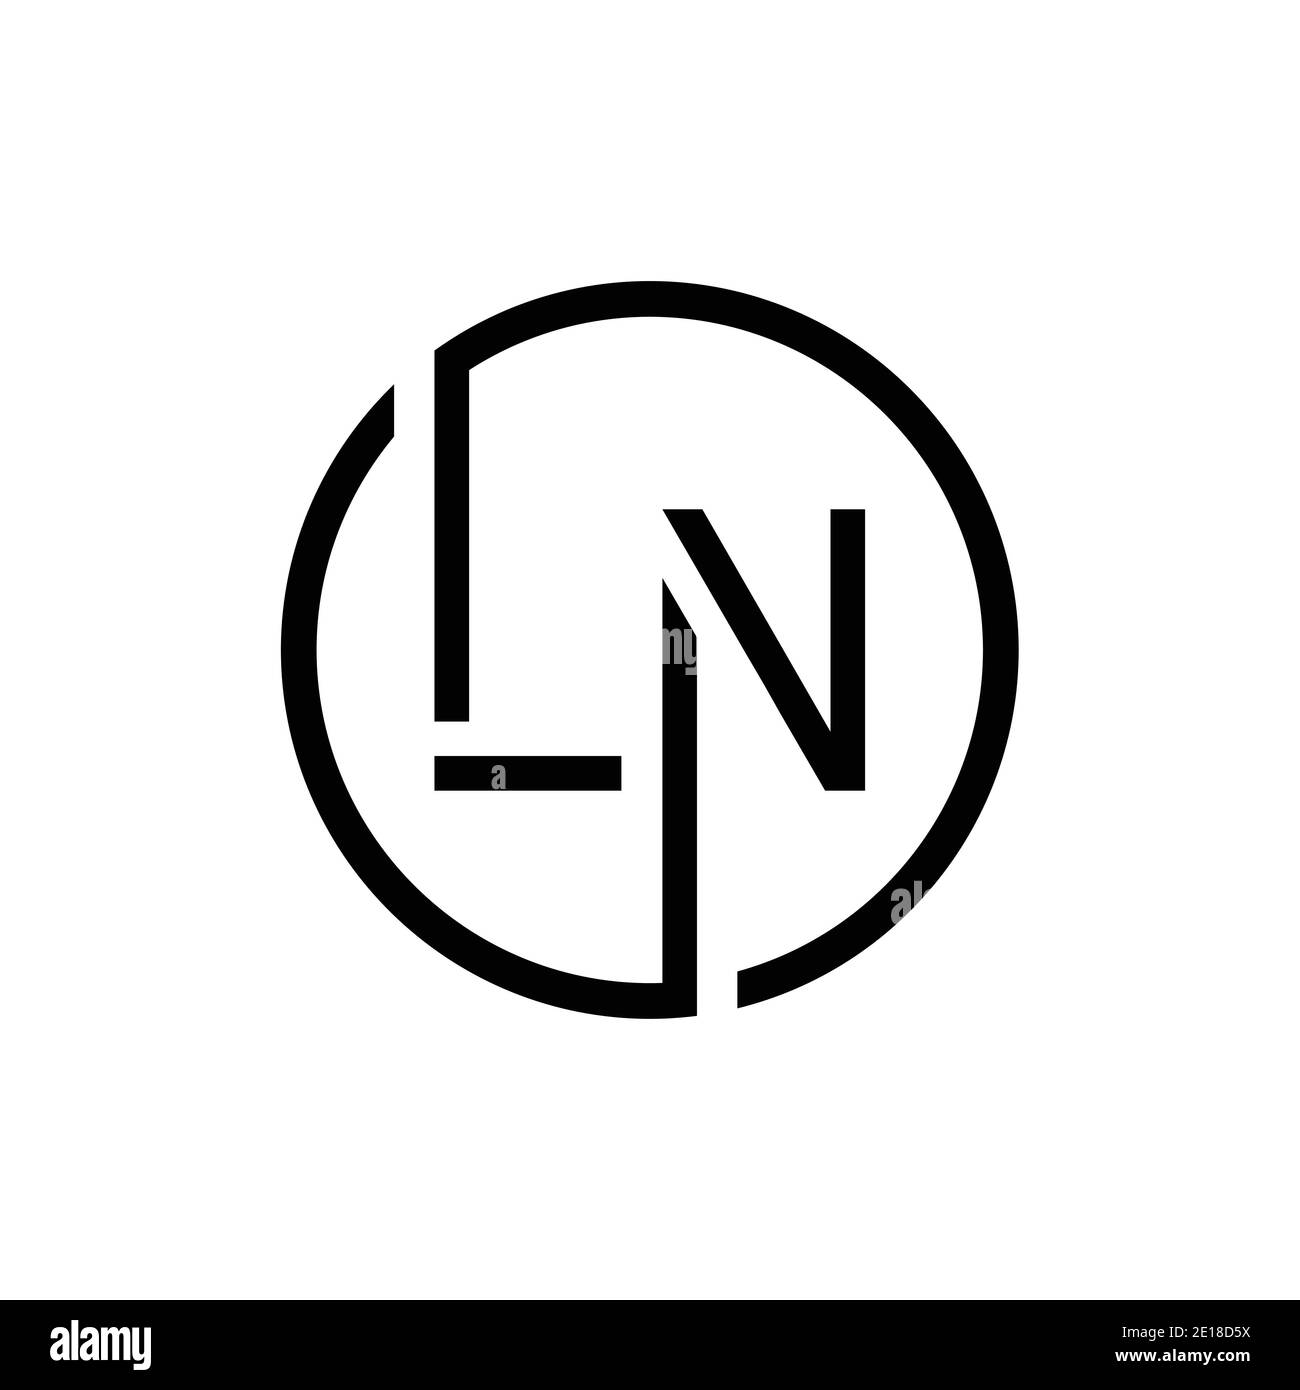 Initial Circle LN letter Logo Design vector Template. Abstract Letter LN logo Design Stock Vector